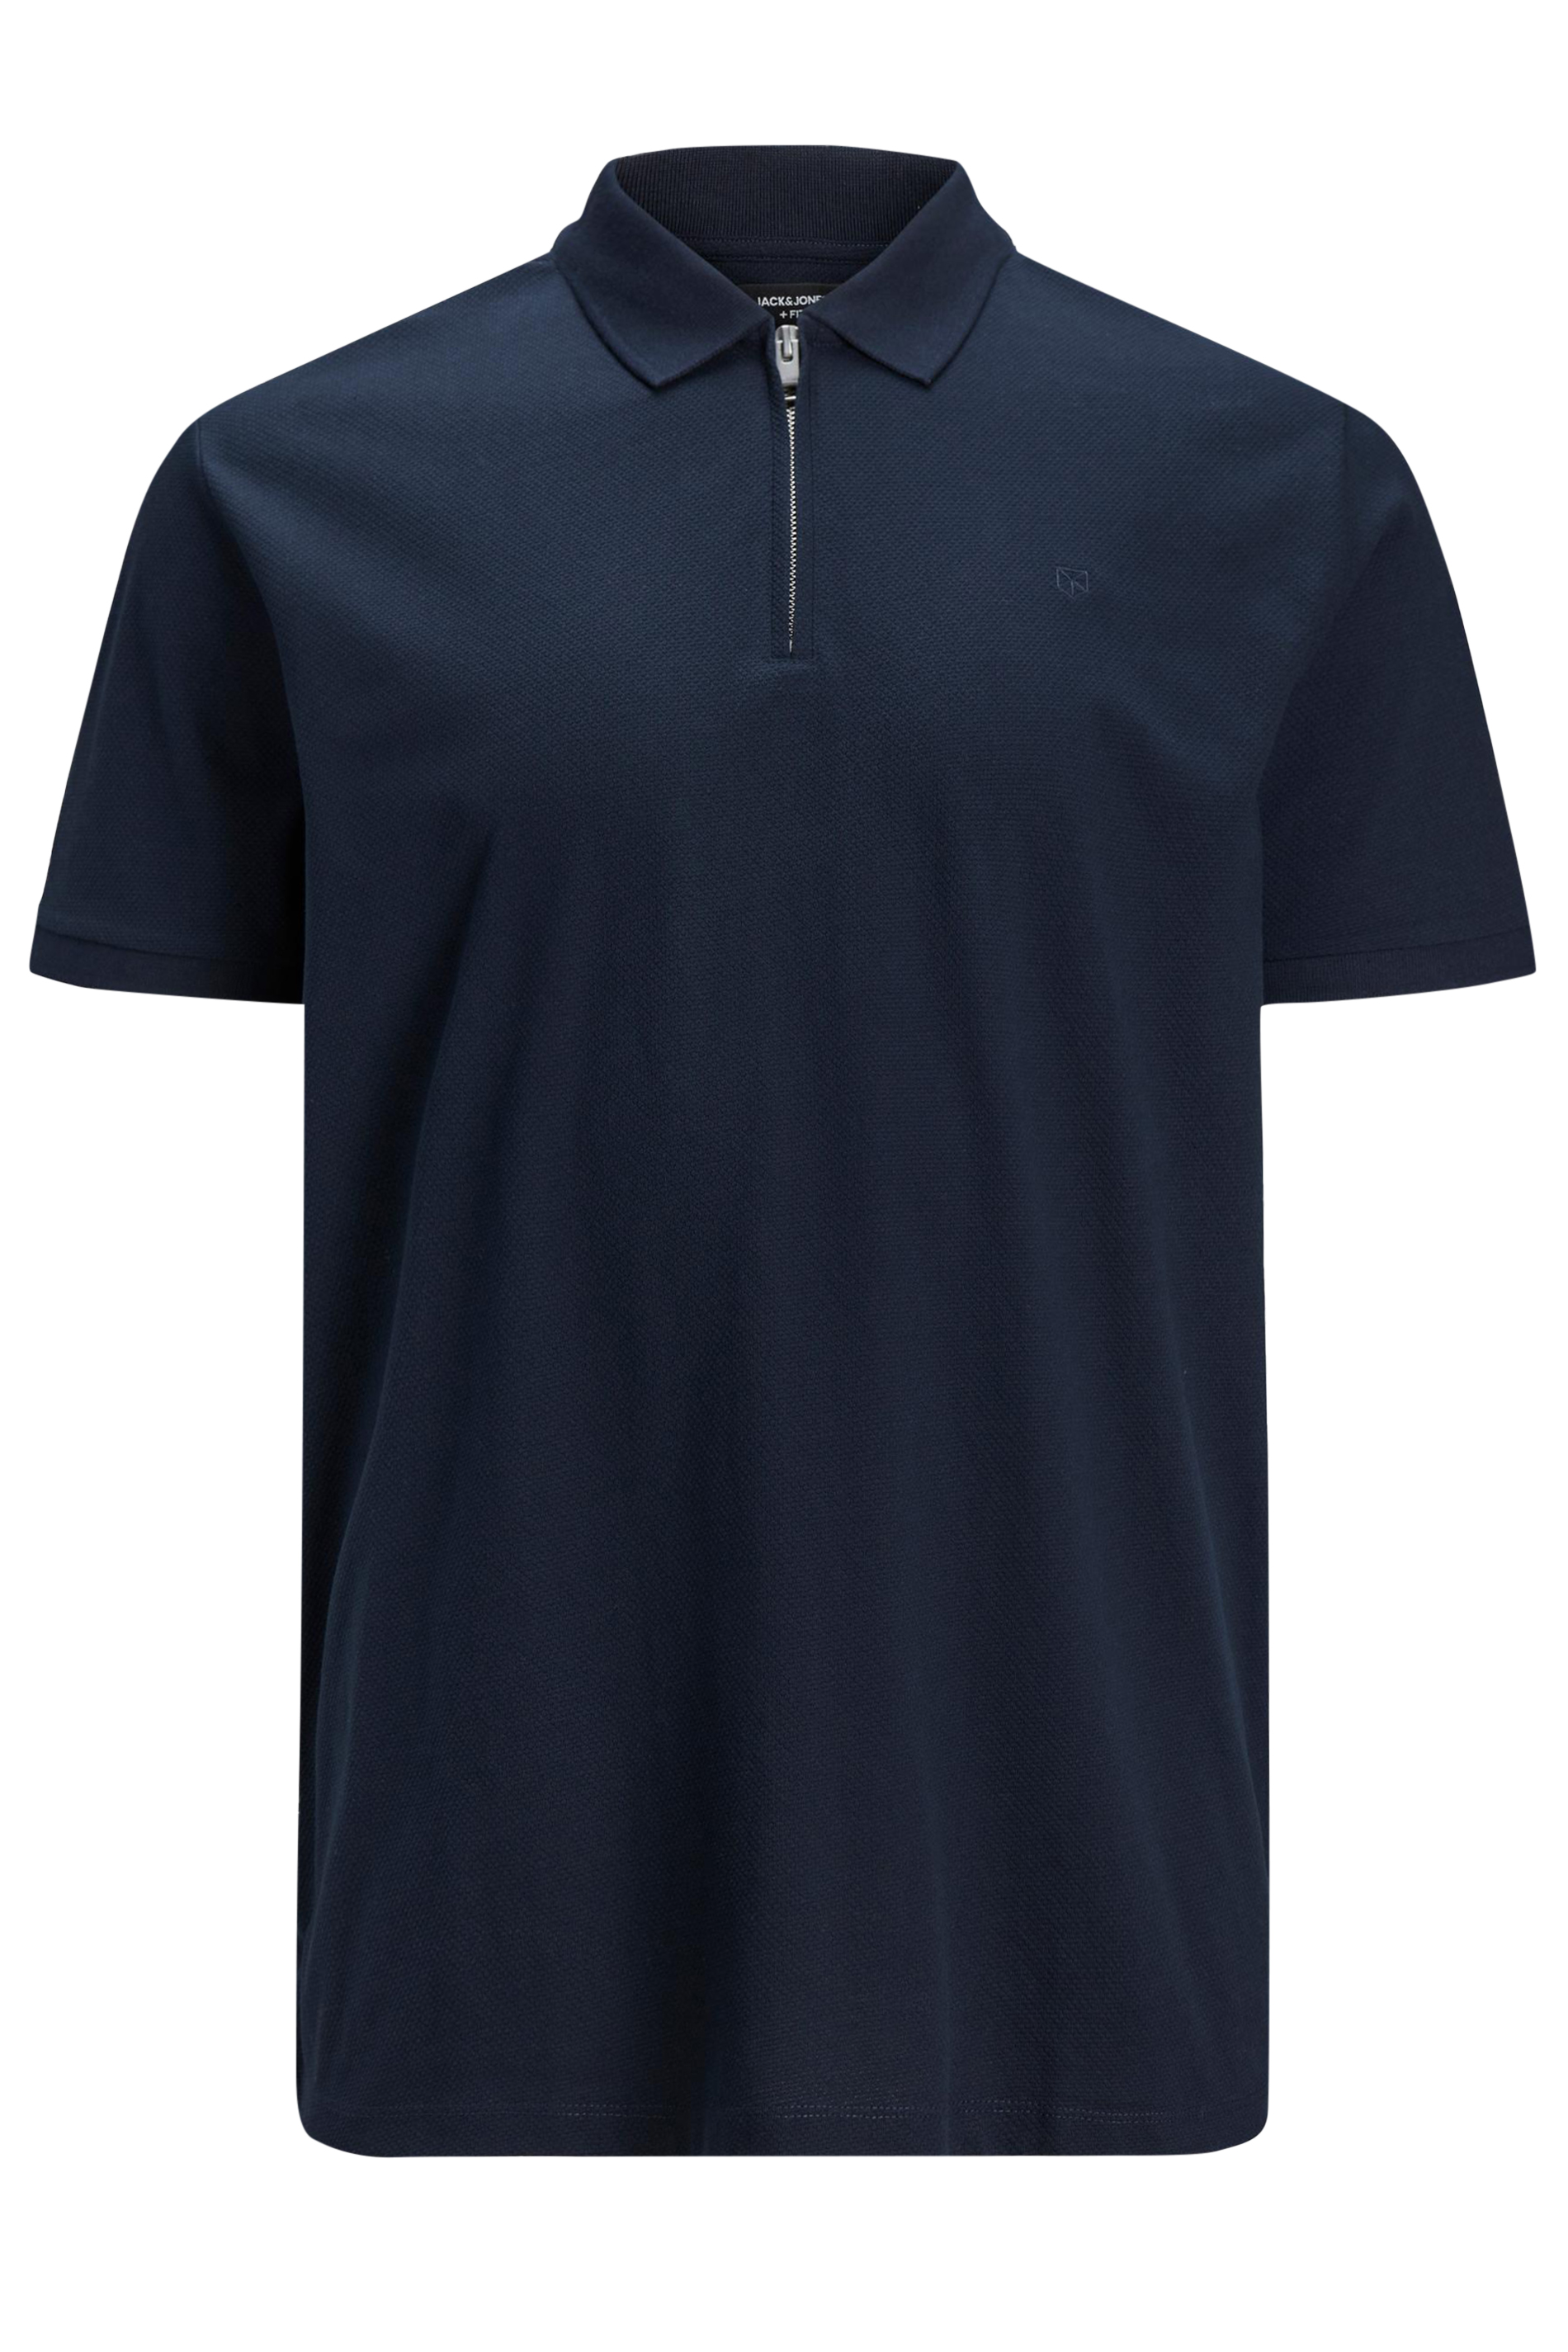 JACK & JONES PREMIUM Big & Tall Navy Blue Zip Polo Shirt | BadRhino 2